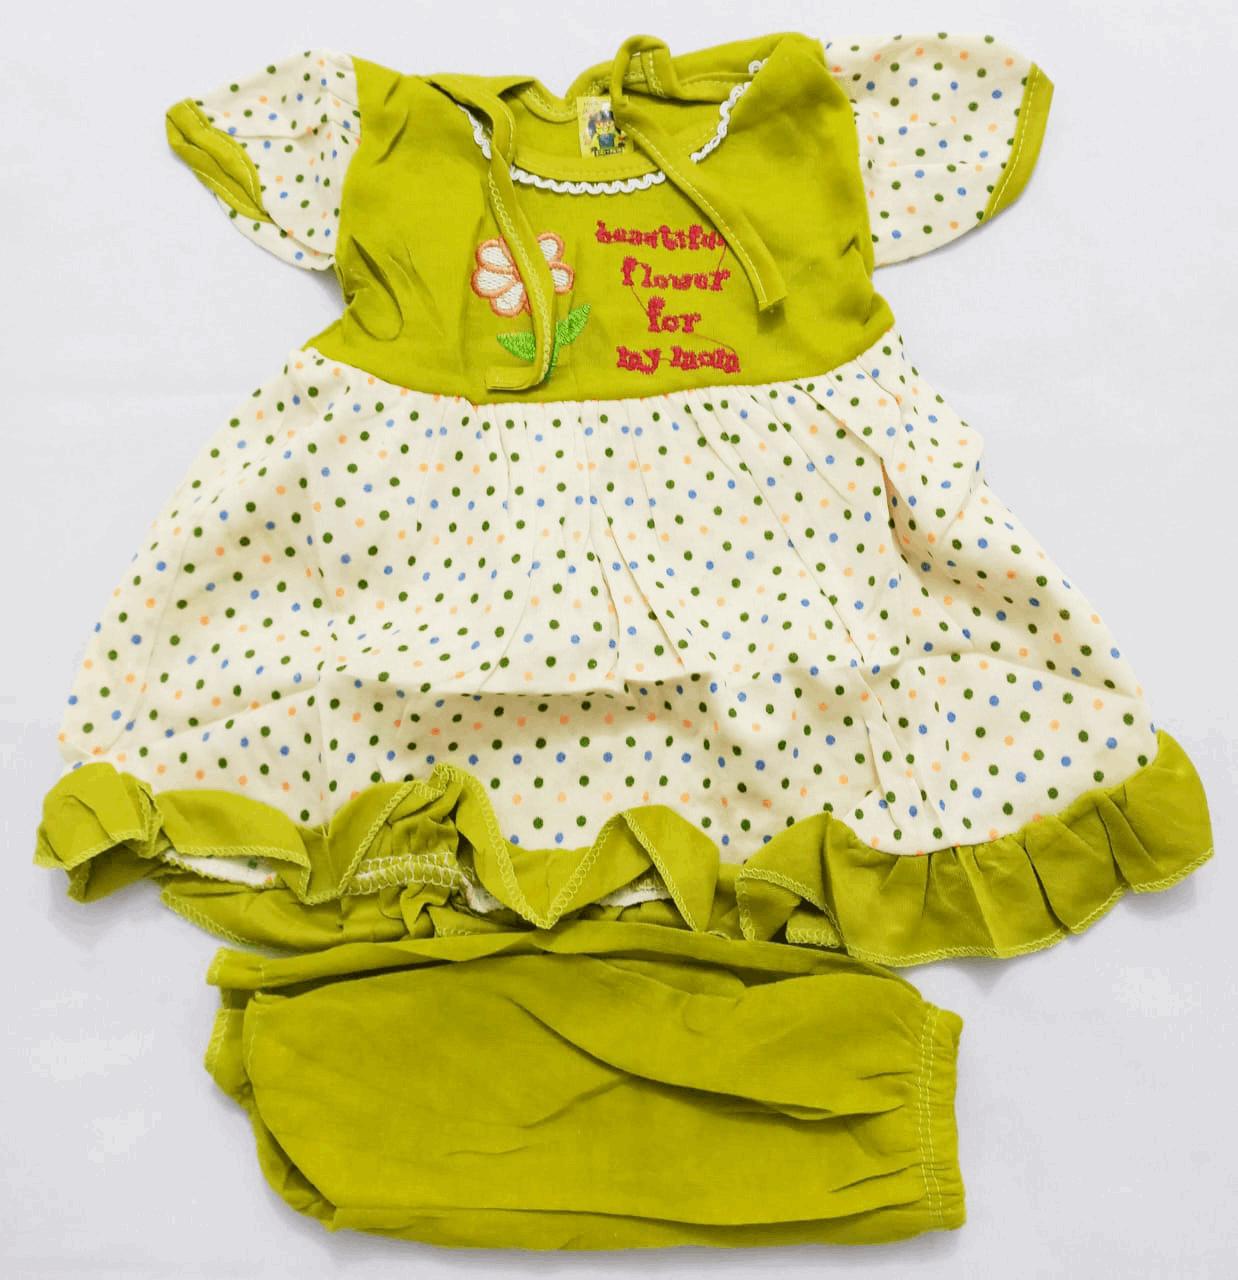 Adorable Elegant Newborn Up & Down Clothes Matching Set (Dress & Pants) for Baby Girls | BLC16b